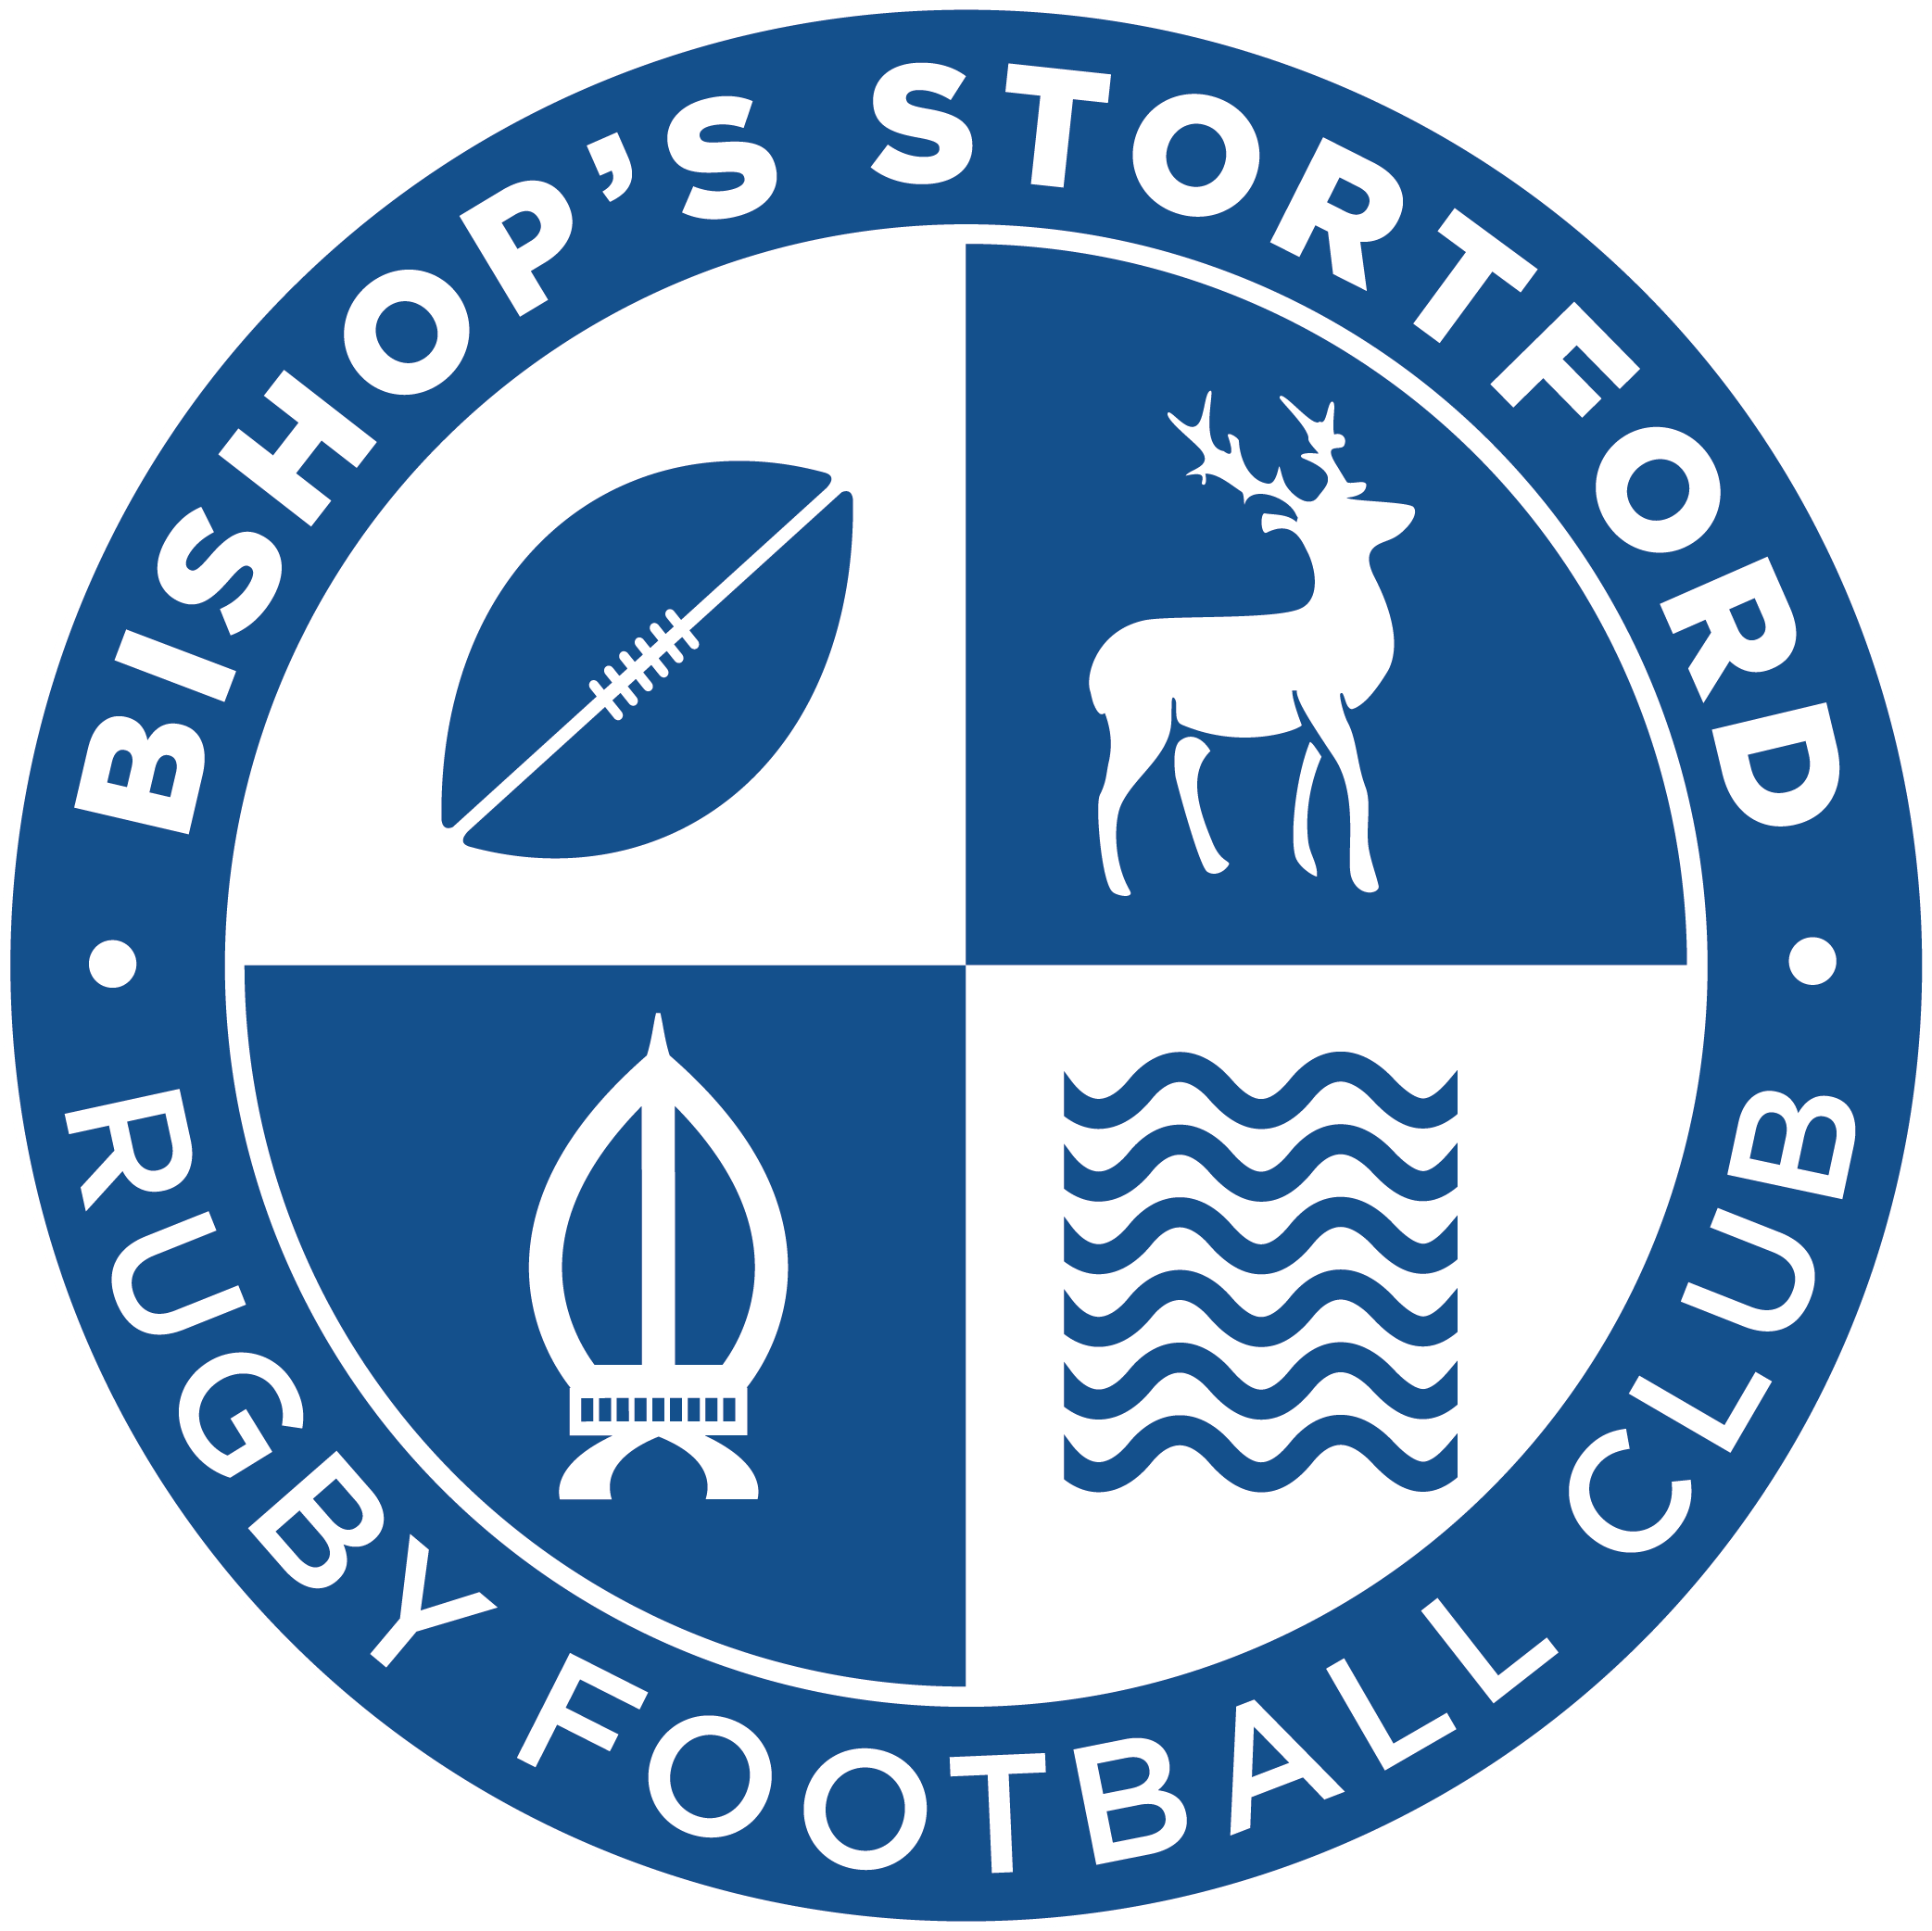 The Bishop's Stortford Rugby Club